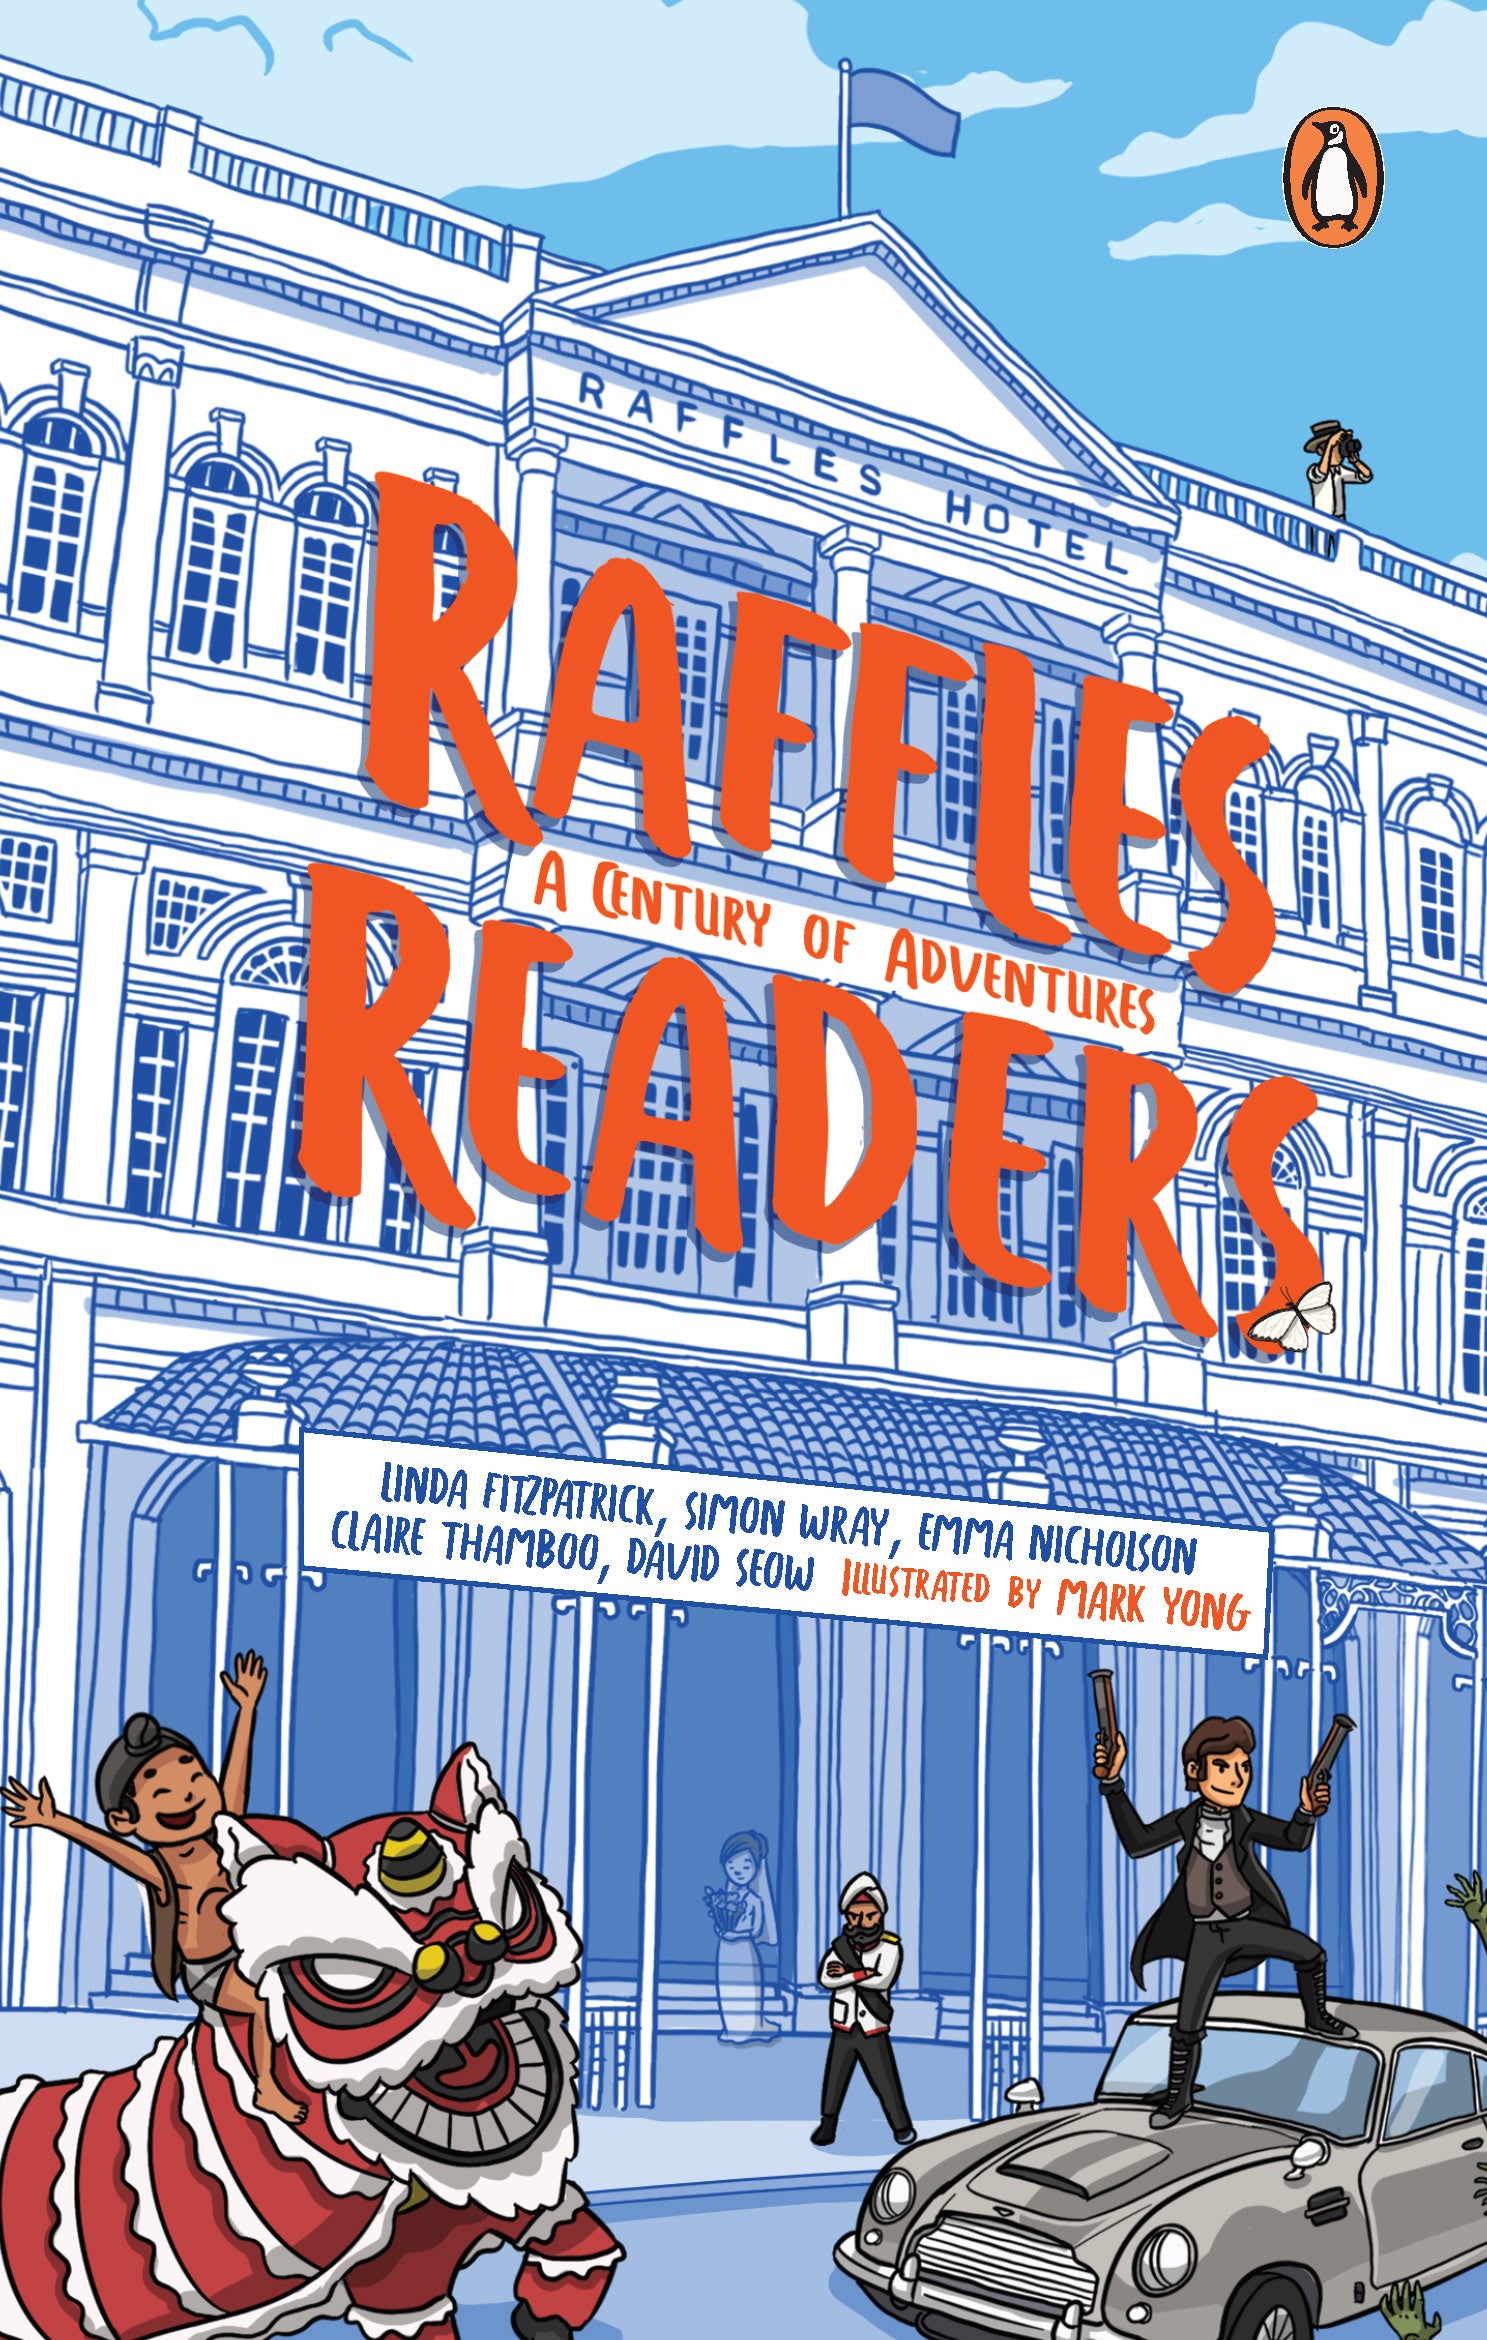 Raffles Readers: A Century of Adventures